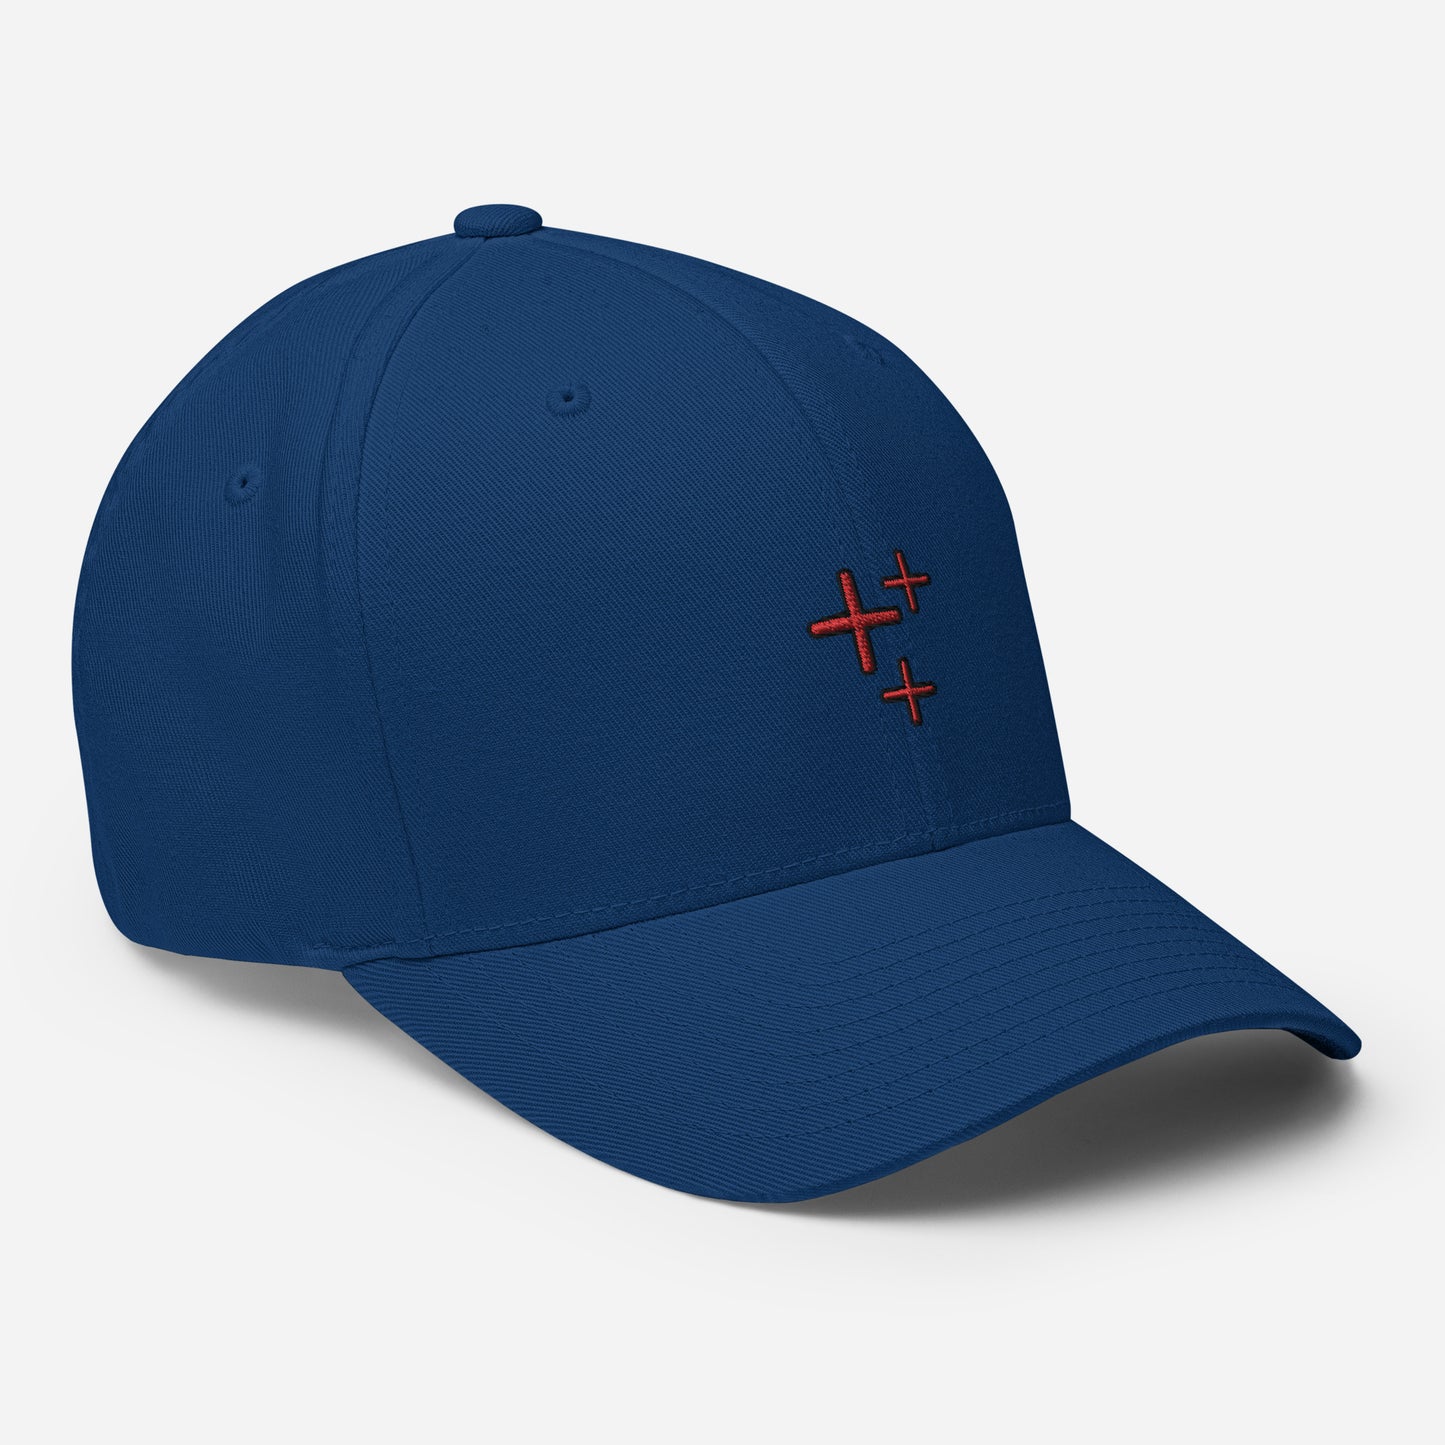 Baseball Cap with 3x Plus Symbol